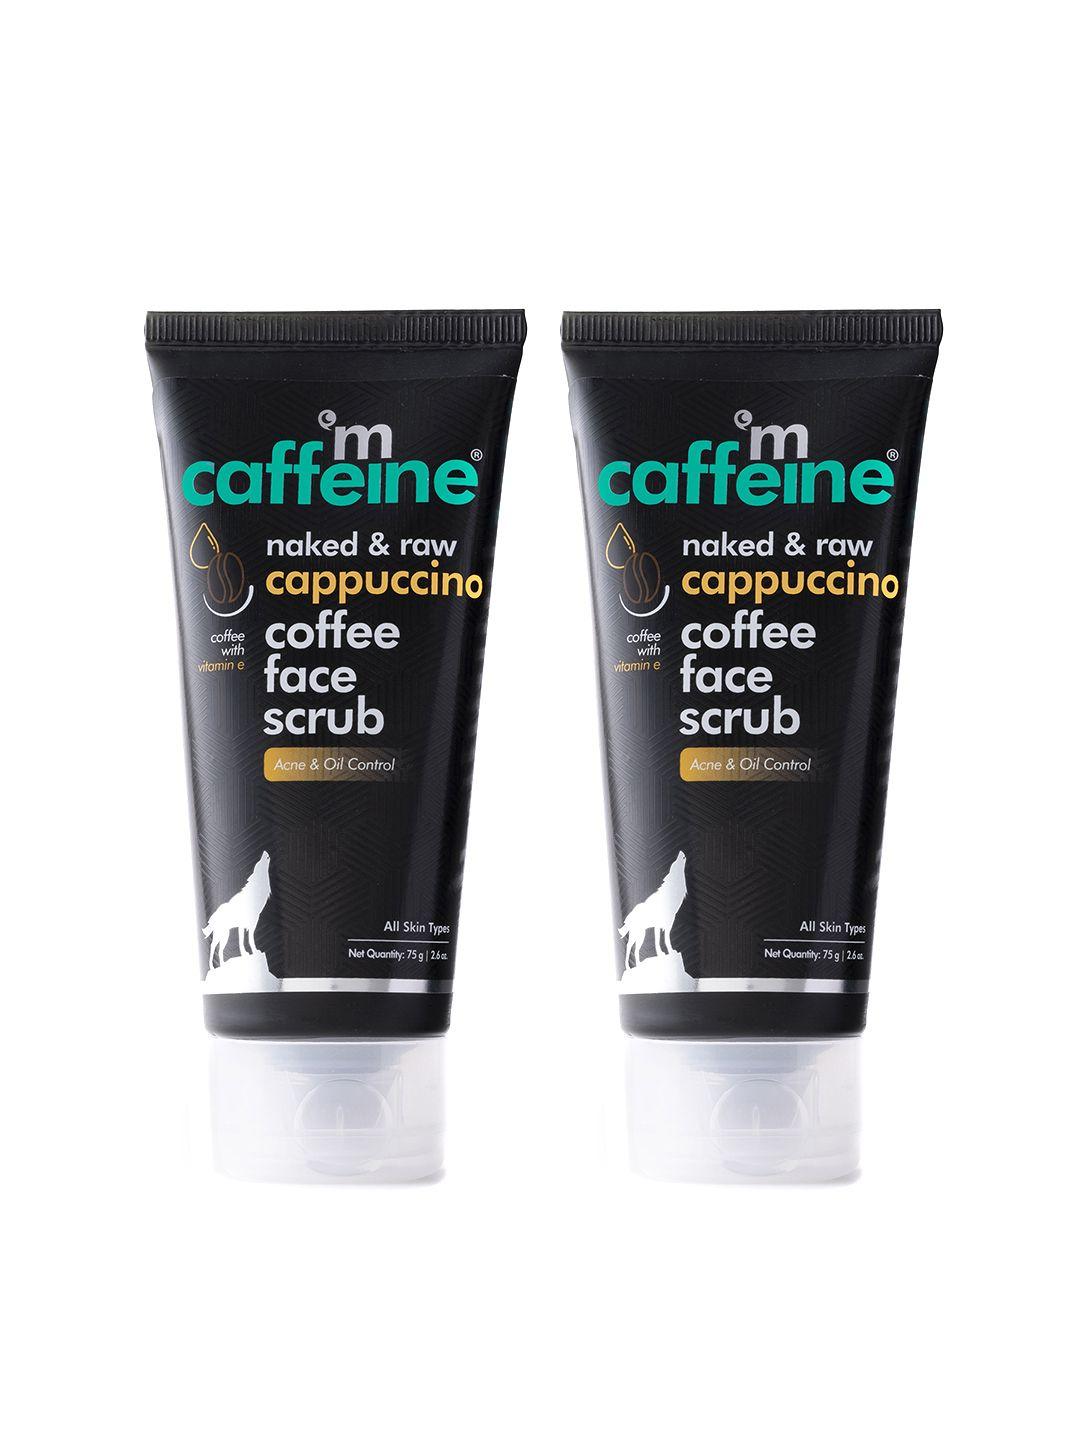 mcaffeine set of 2 anti-acne cappuccino scrub with coffee for mild exfoliation - 75g each